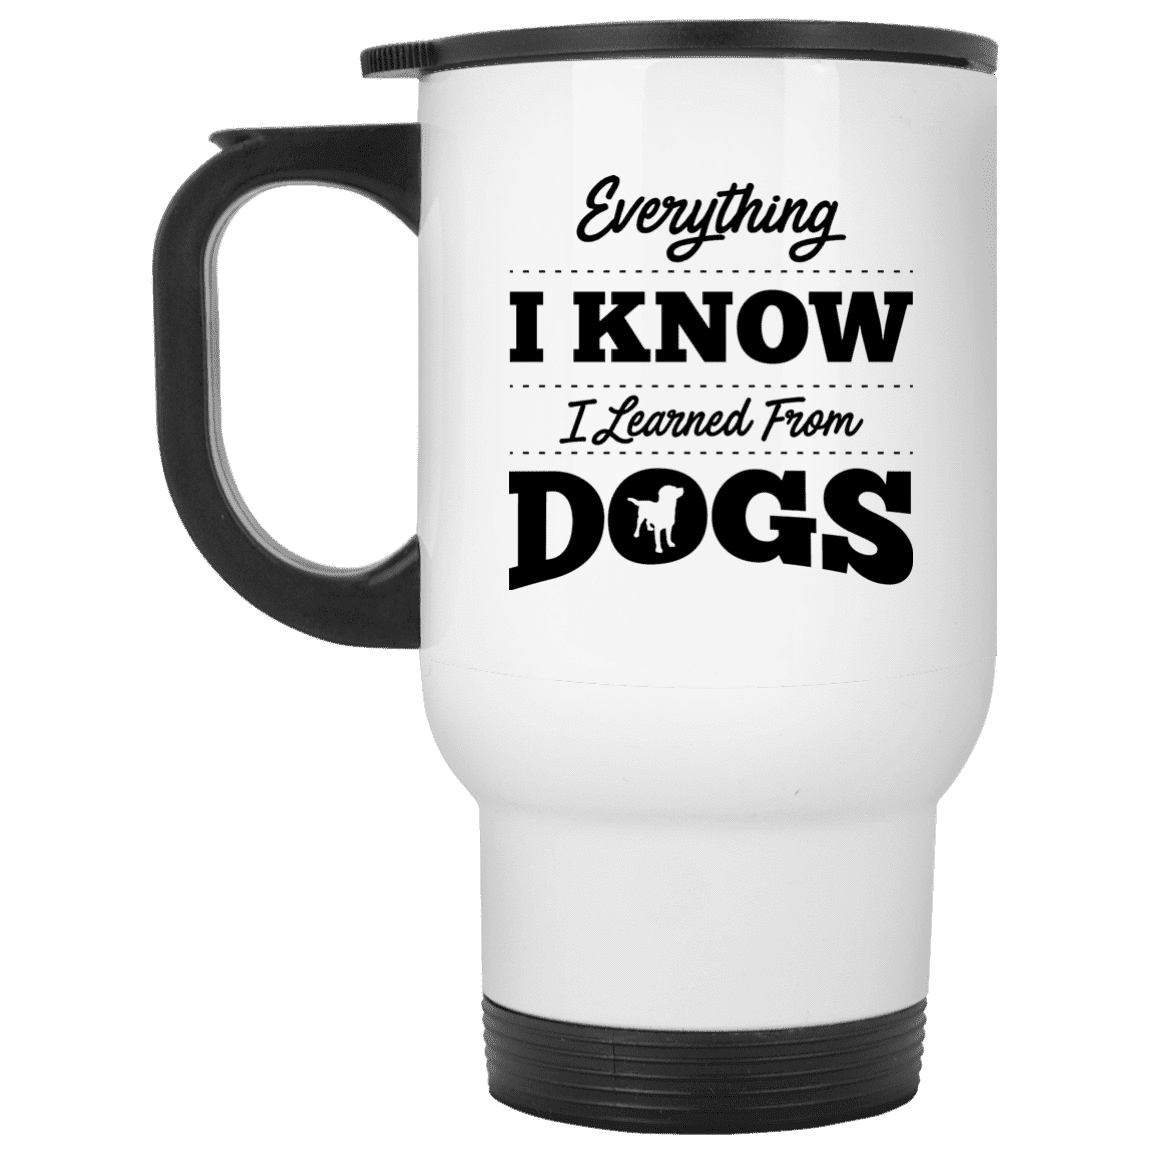 Everything I Know - Mugs.